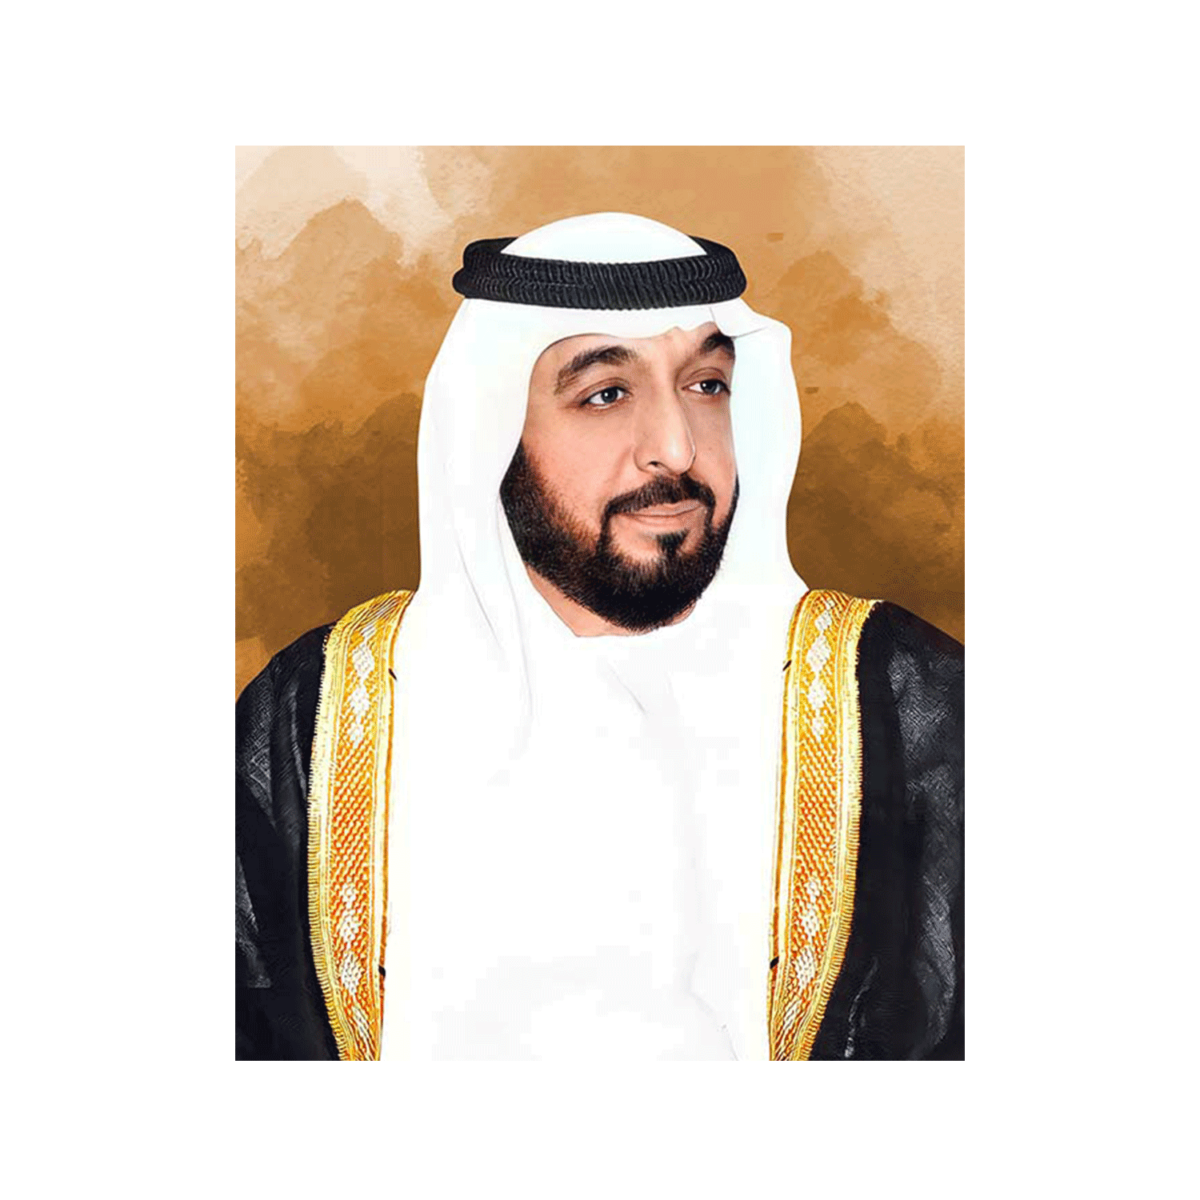 His Highness Sheikh Khalifa Bin Zayed Al Nahyan